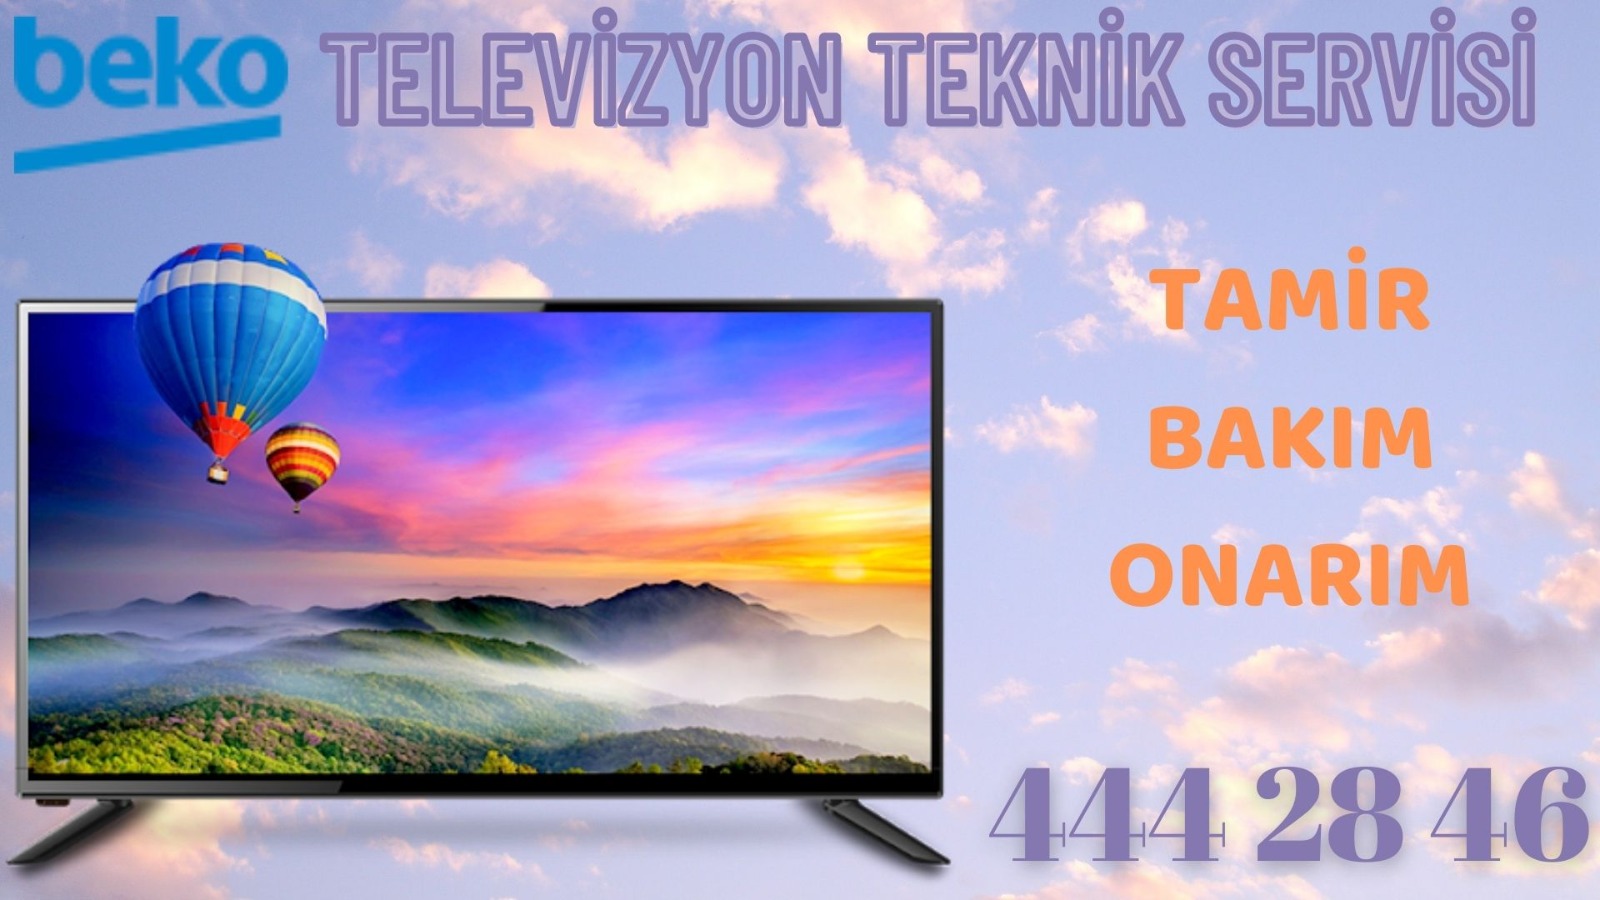 Eskişehir Beko Televizyon Servisi